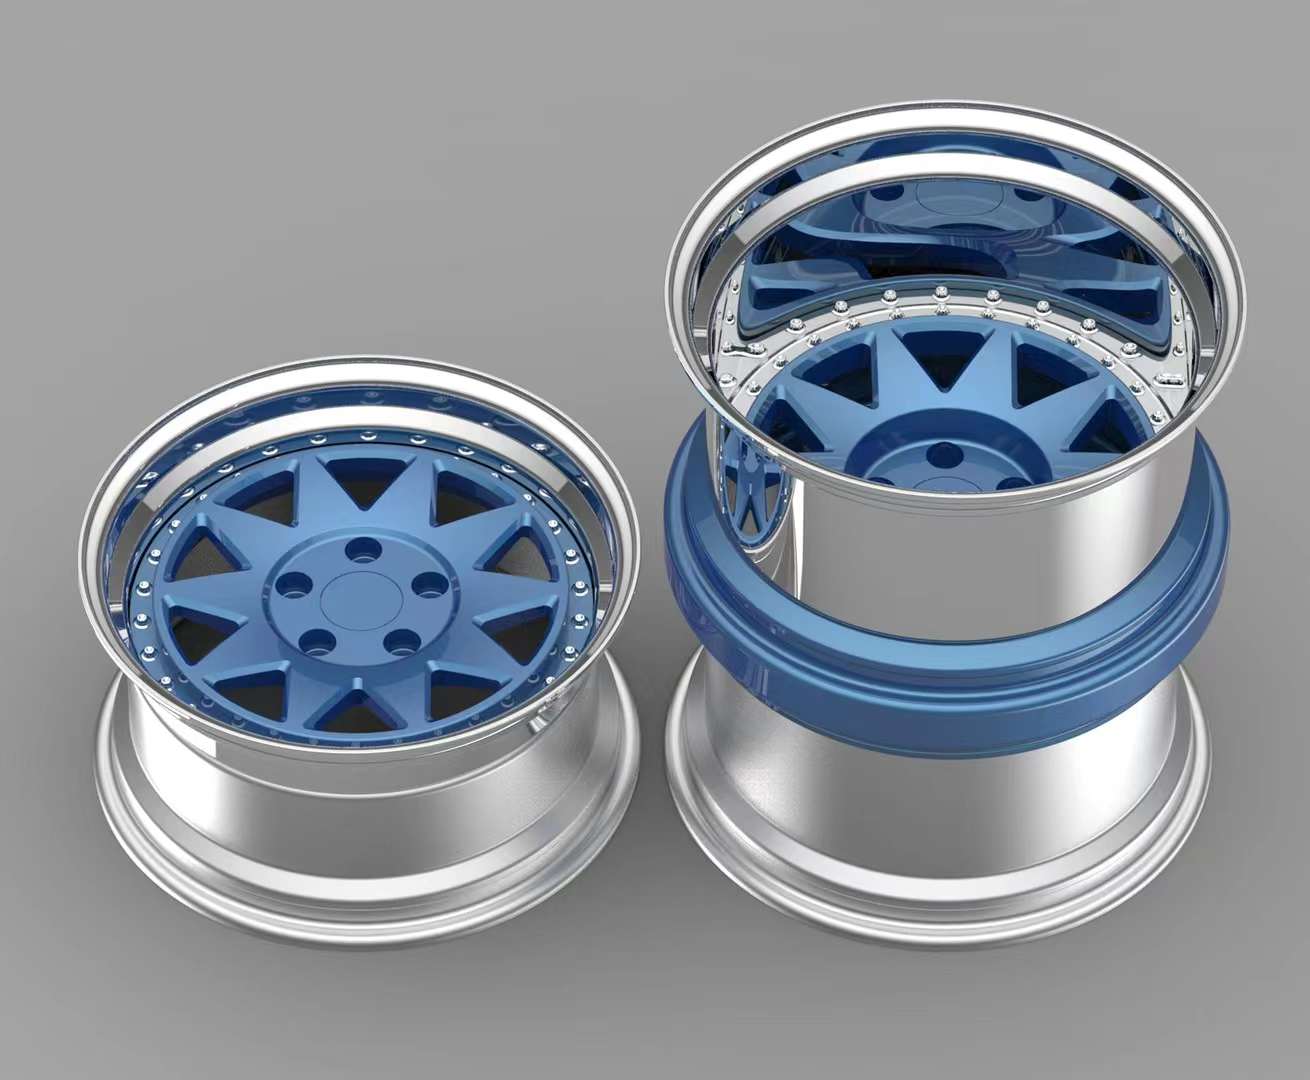 Super Deep Dish 19x20J Rear Wheel Double Tire Exclusive New Design 3-piece wheels